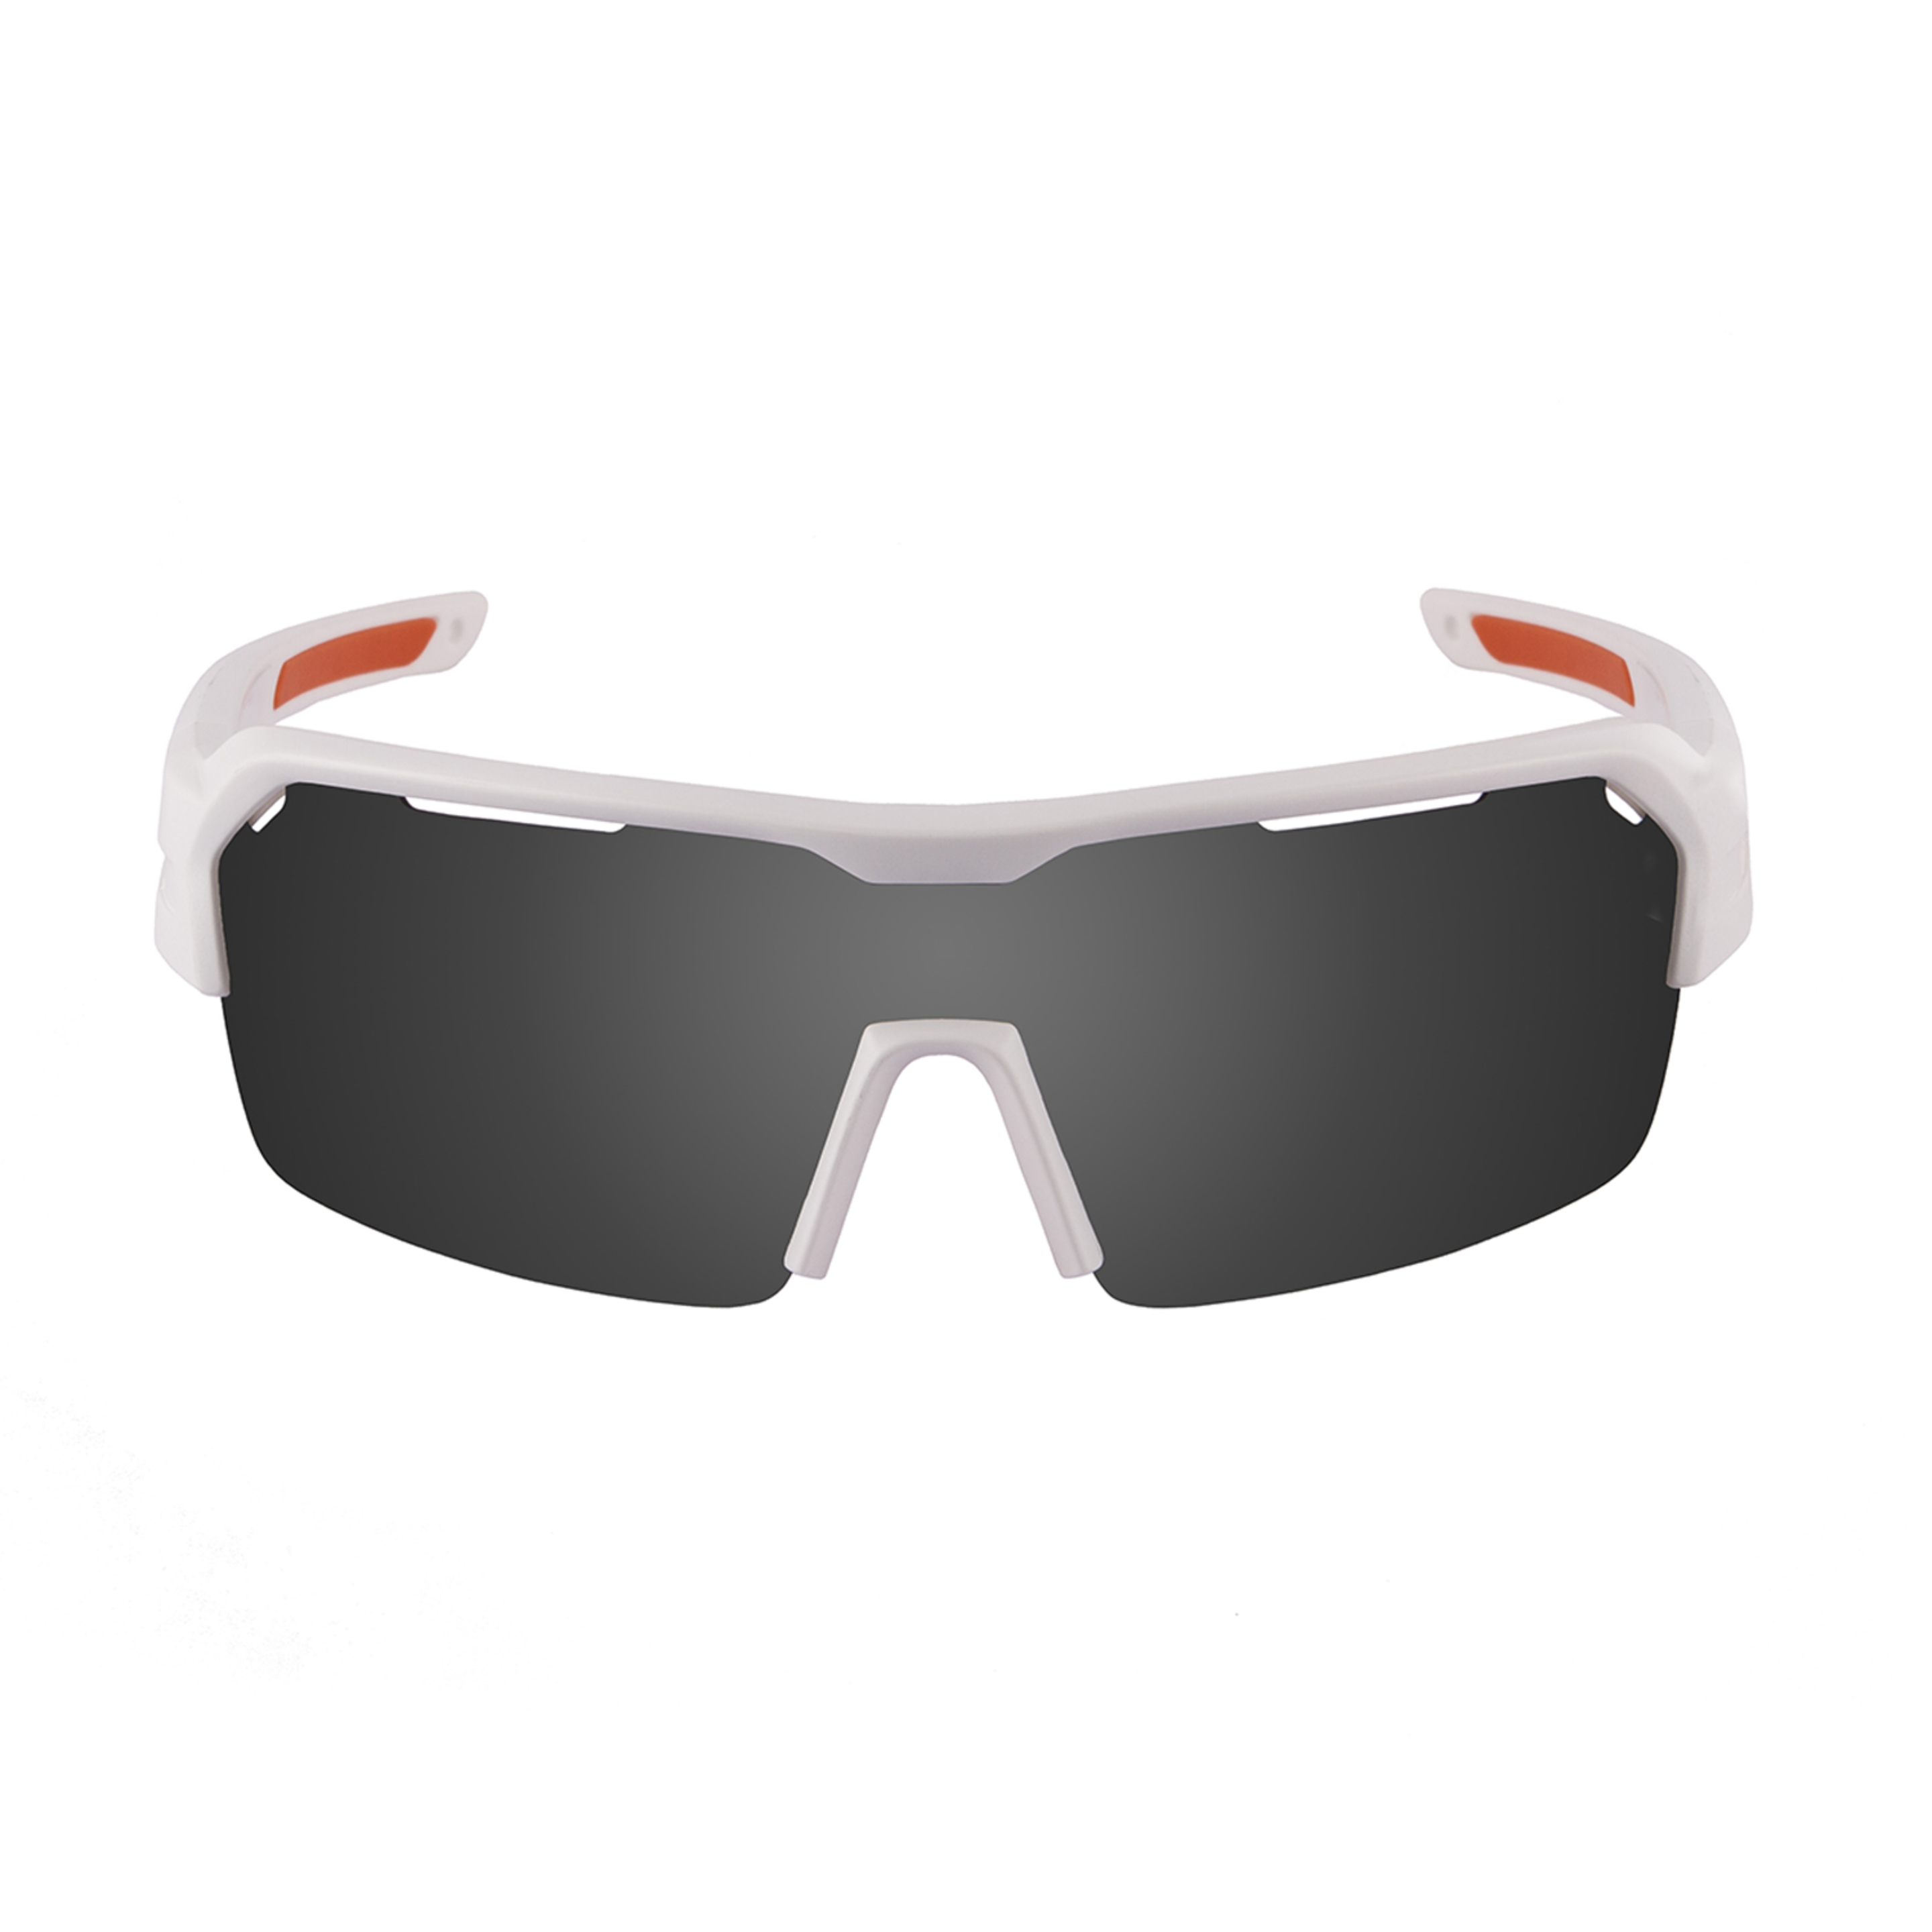 Gafas De Sol Técnicas Para La Práctica De Deportes De Agua Race Ocean Sunglasses - Gris/Blanco  MKP